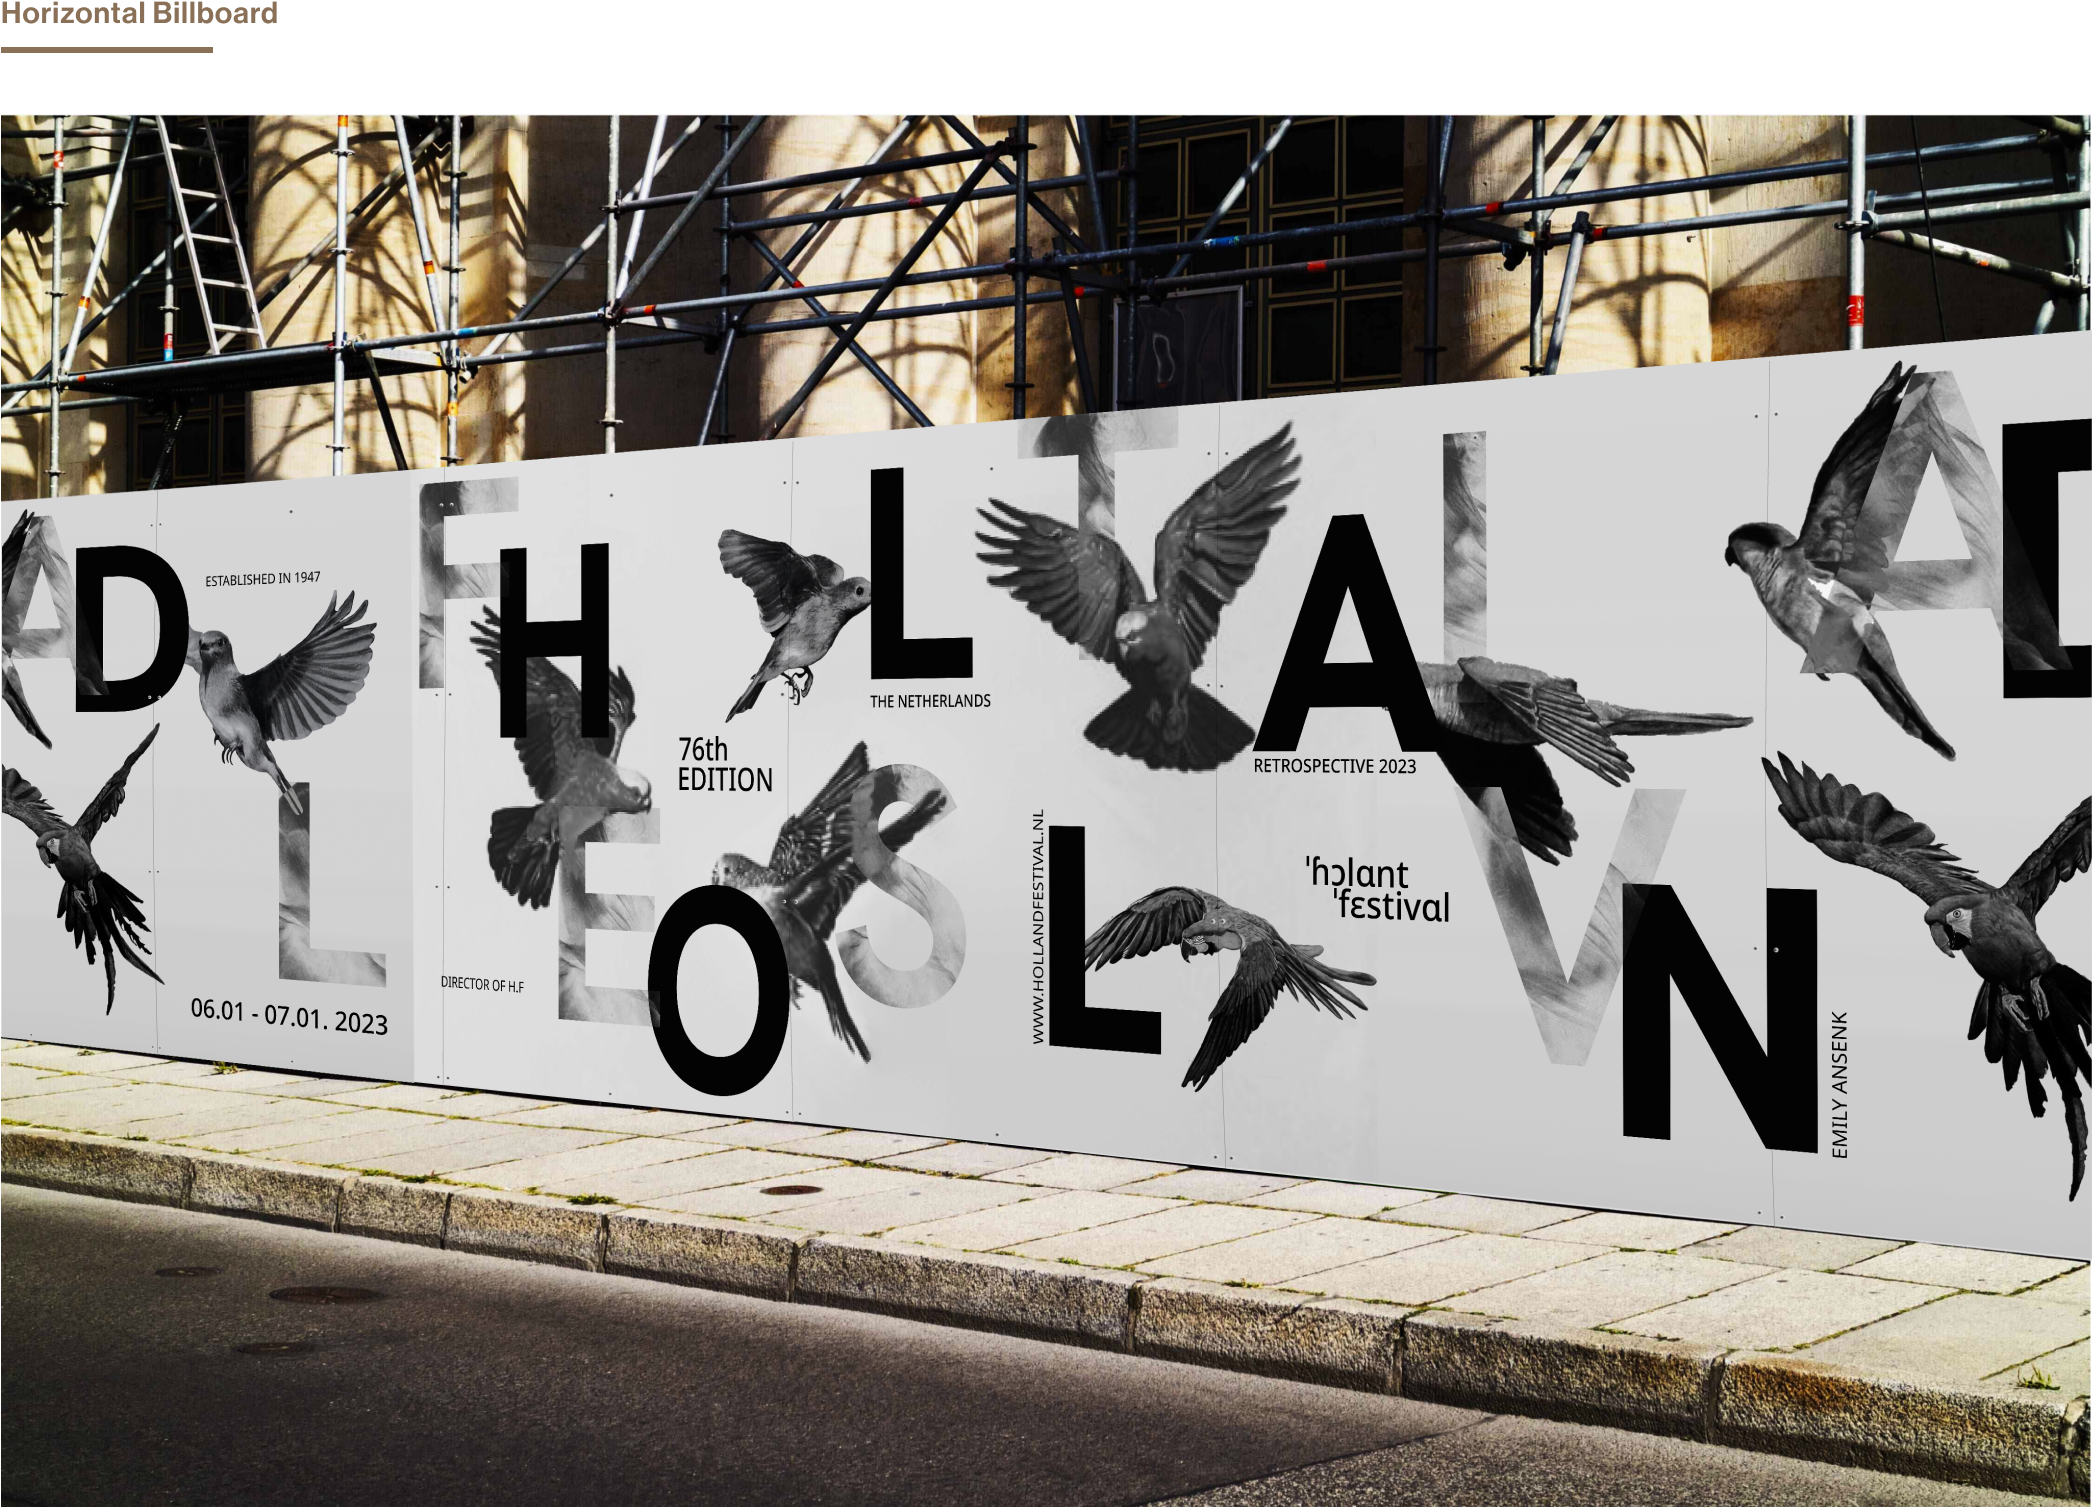 holland-horizontal-billboard